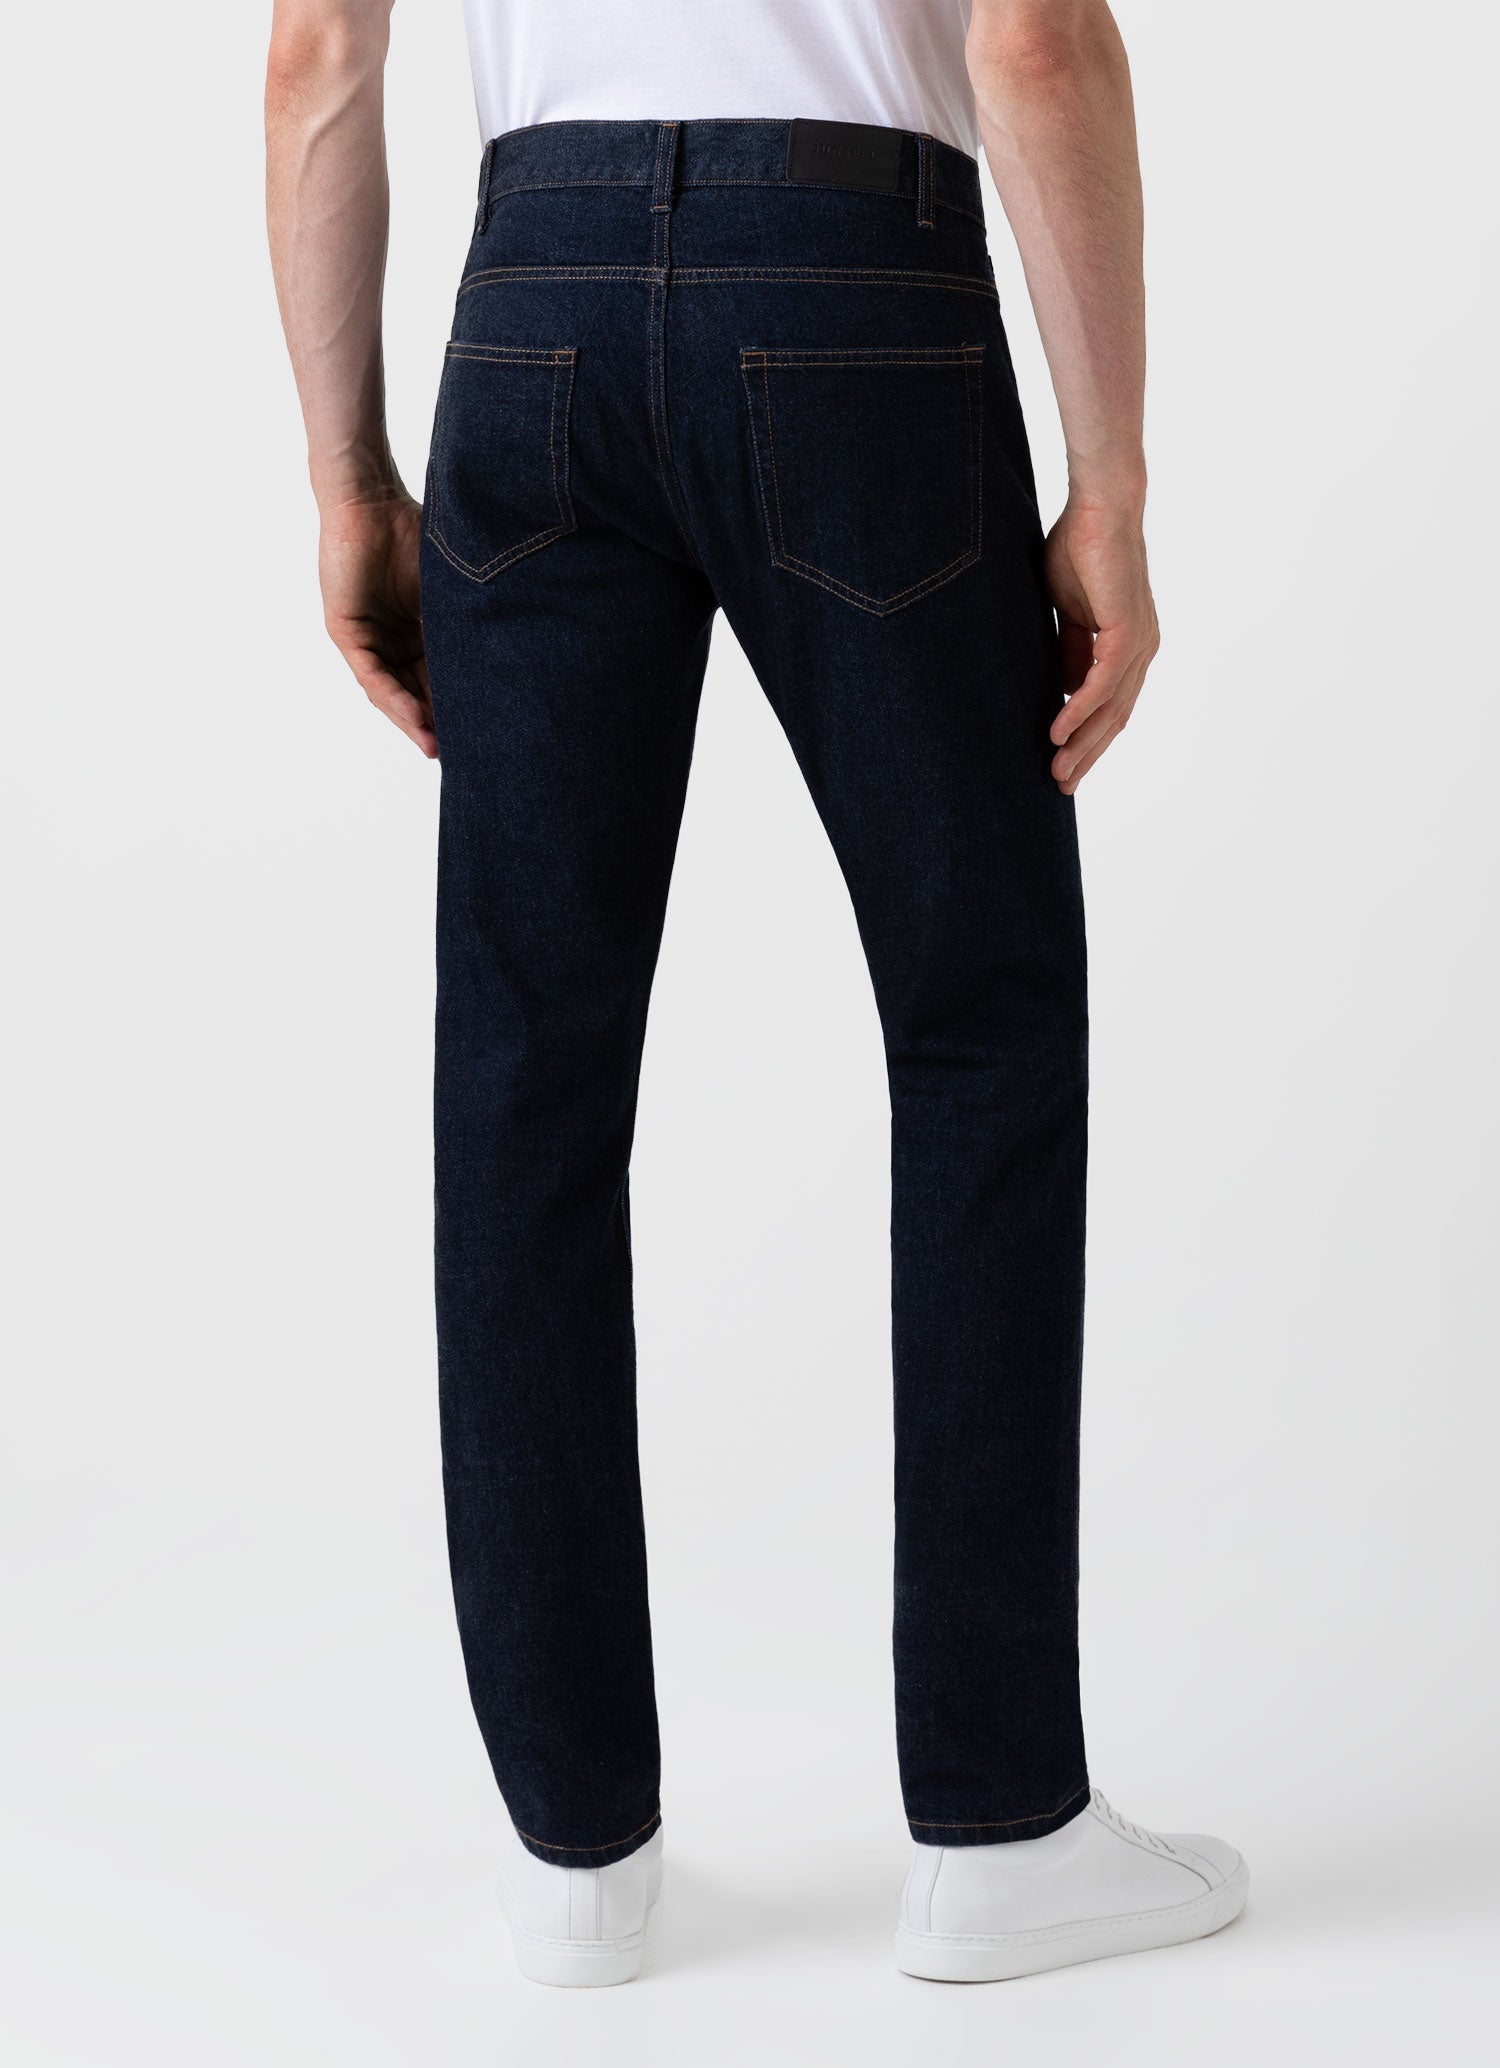 Men's Slim Fit Jeans in Rinse Wash Denim